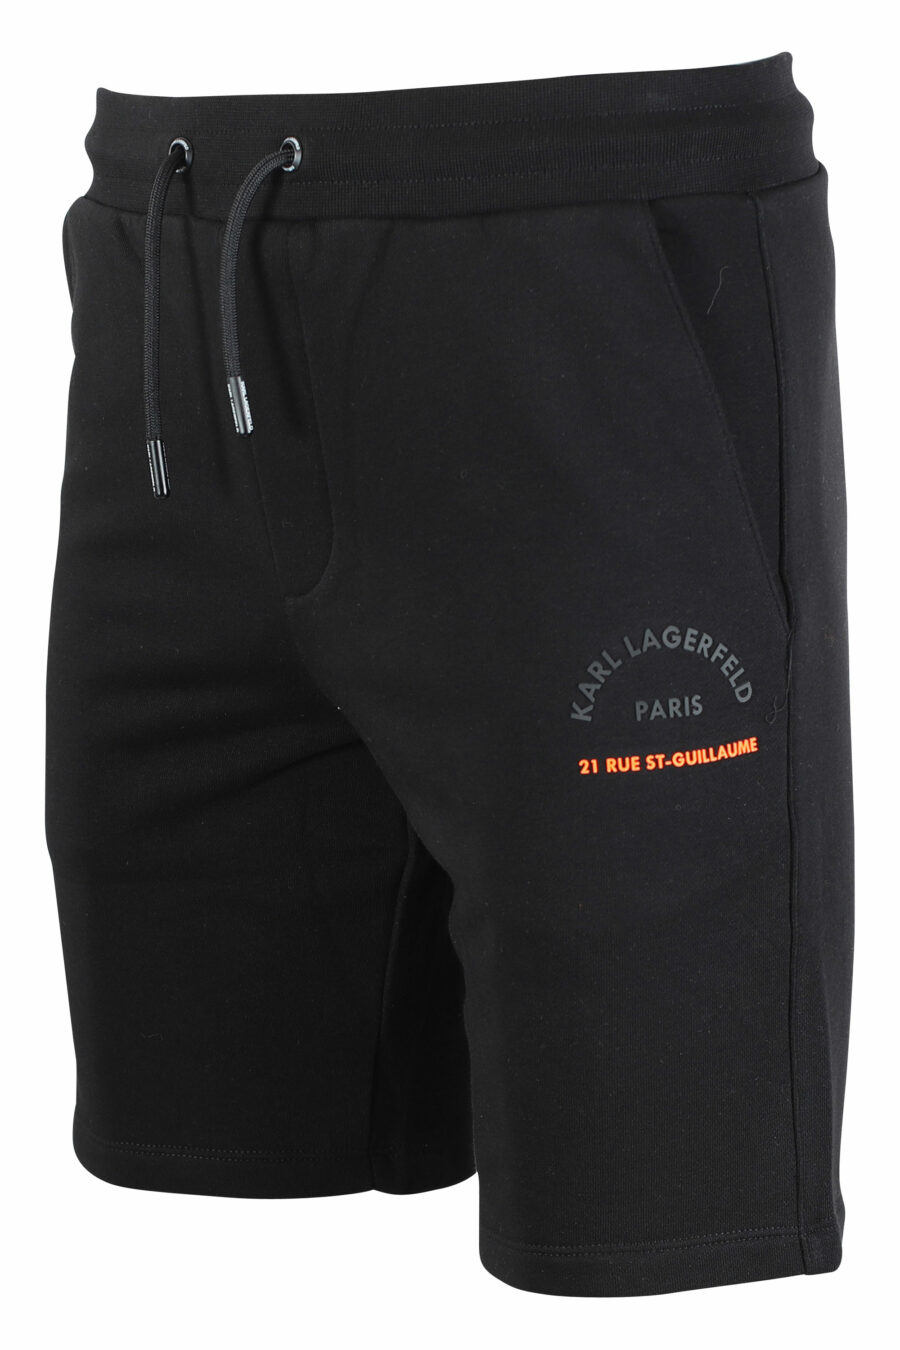 Trainingshose schwarze Shorts mit Minilogue "rue st guillaume" - IMG 9511